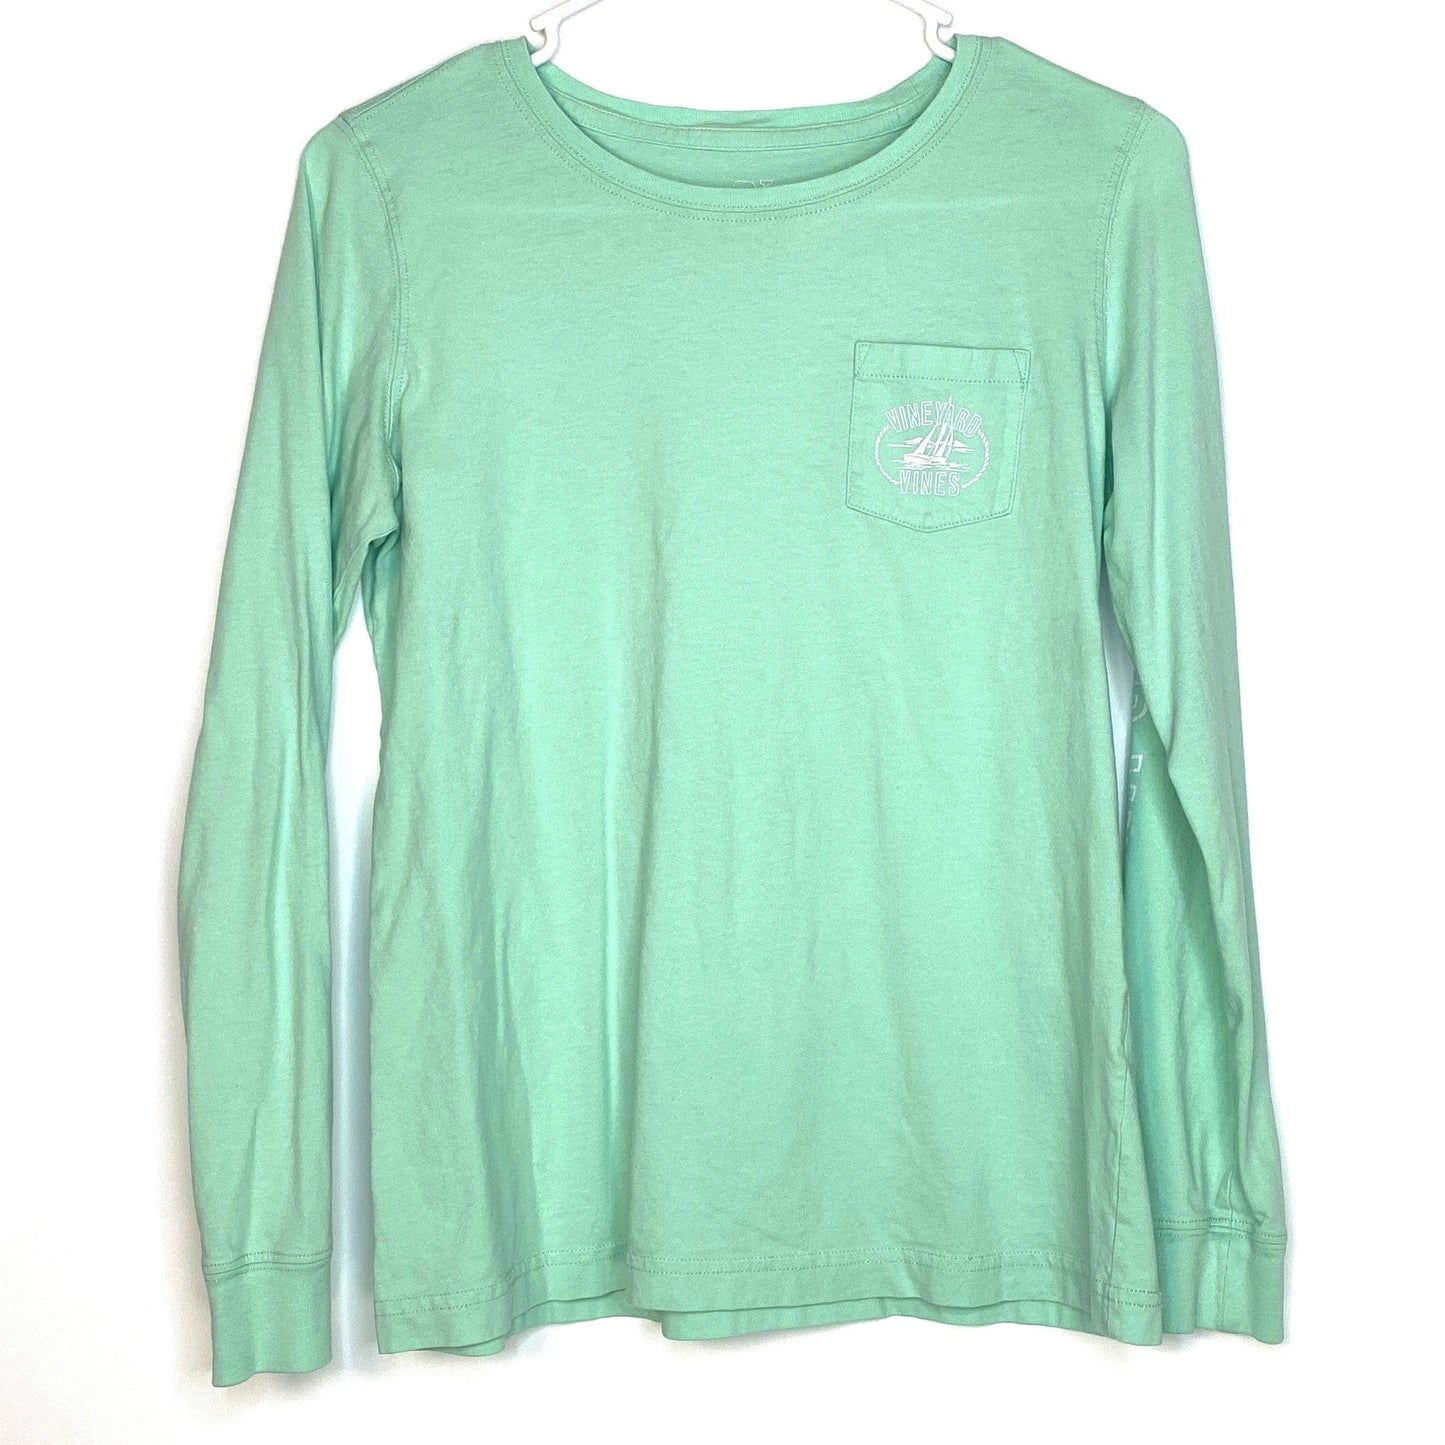 Captivating Vineyard Vines Womens T-Shirt Mint Green Long Sleeve XS